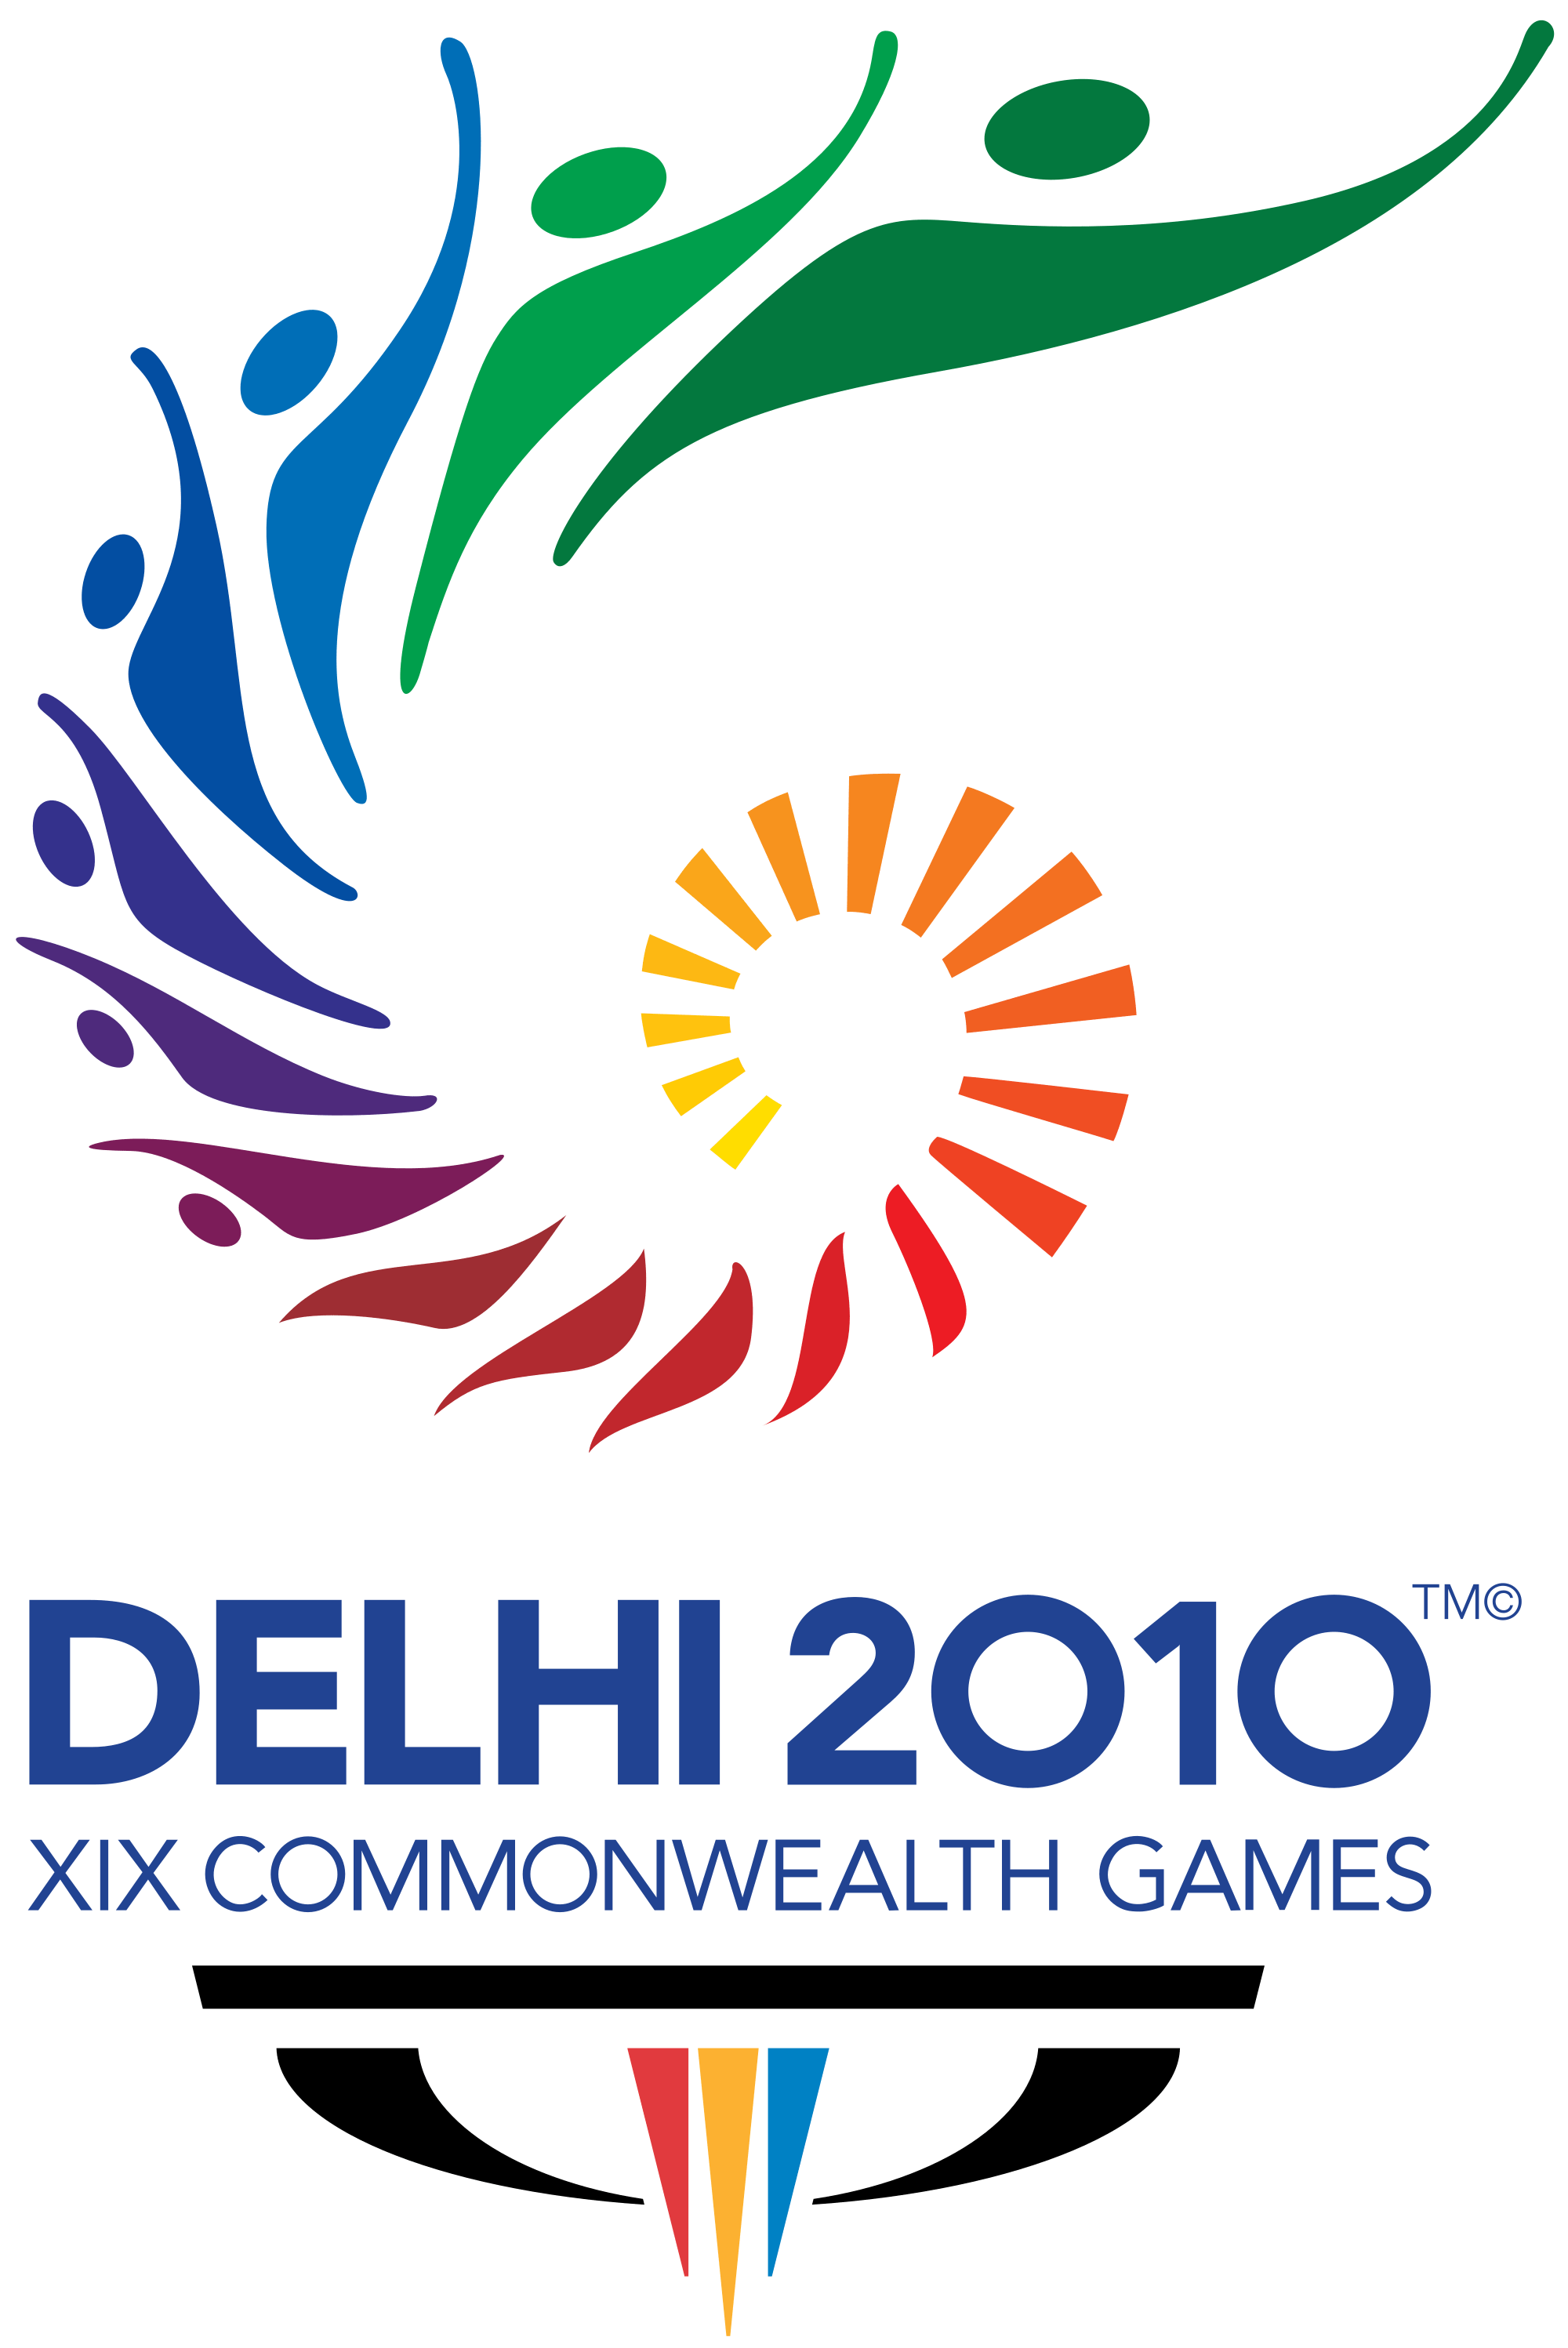 Commonwealth Logo - Delhi 2010 Commonwealth Games. SSEAYP. Commonwealth games, Game